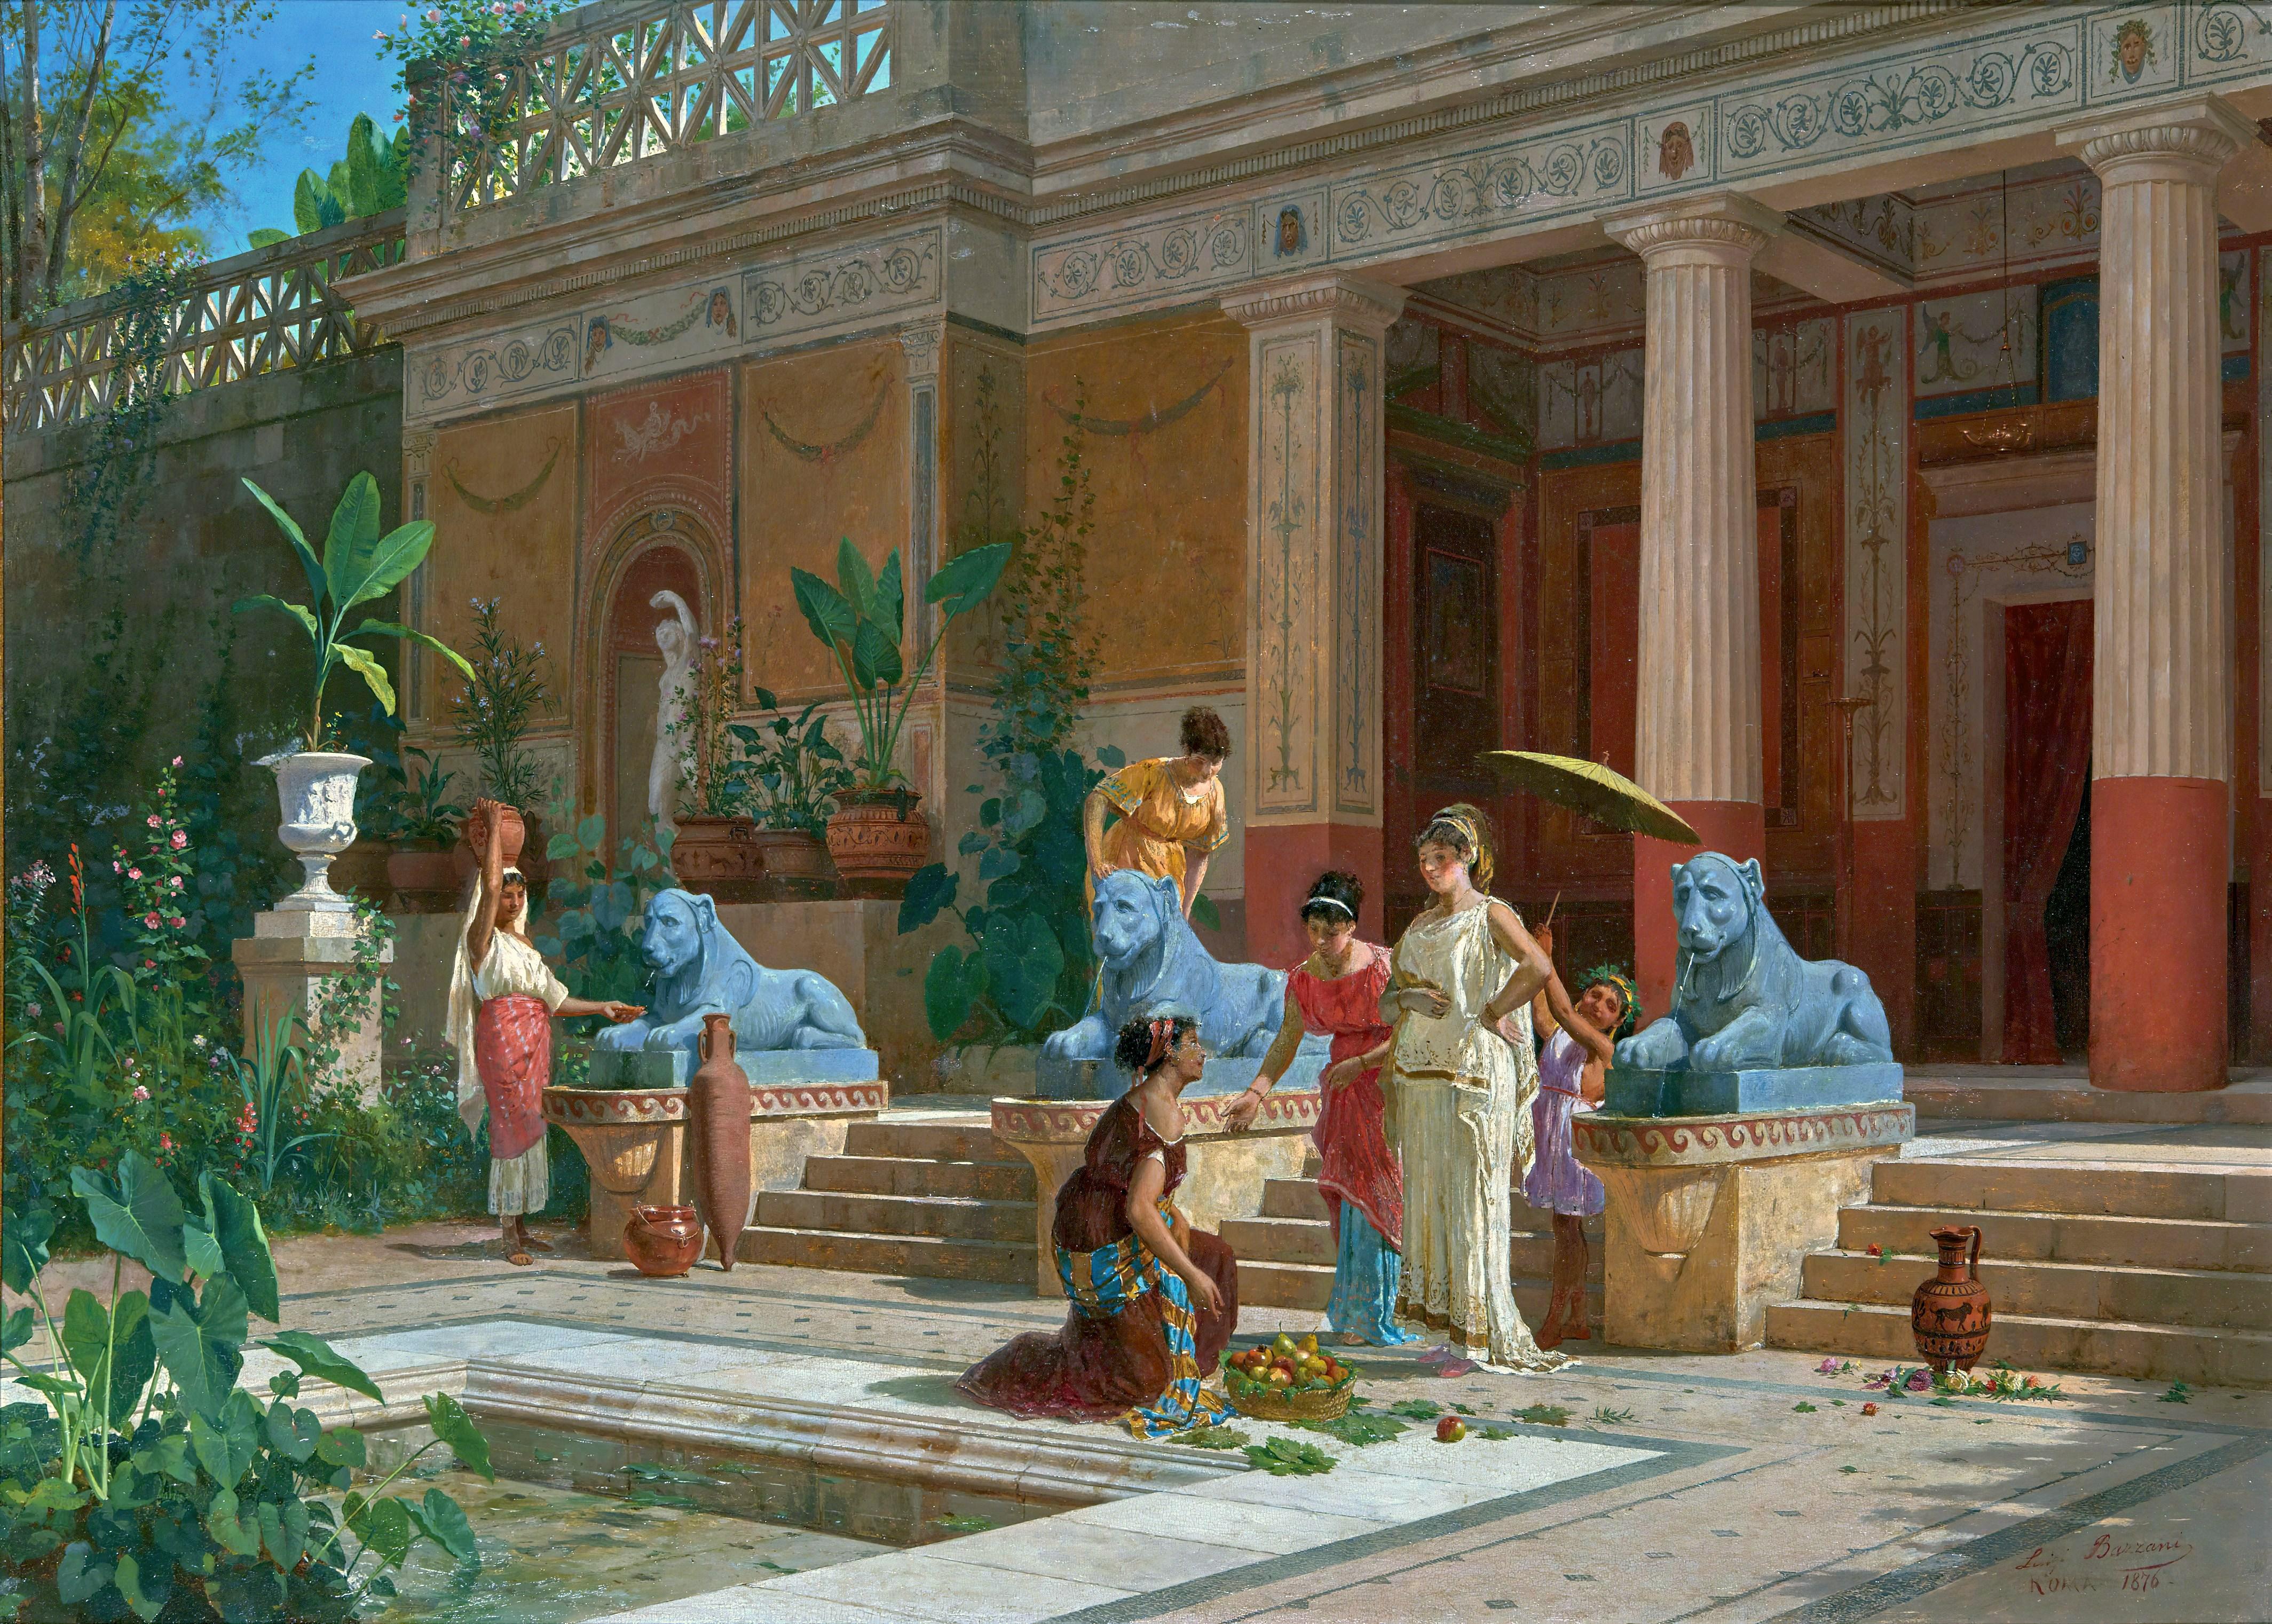 Artwork Painting Women Rome Ancient Rome Garden Statue Palace 4256x3042